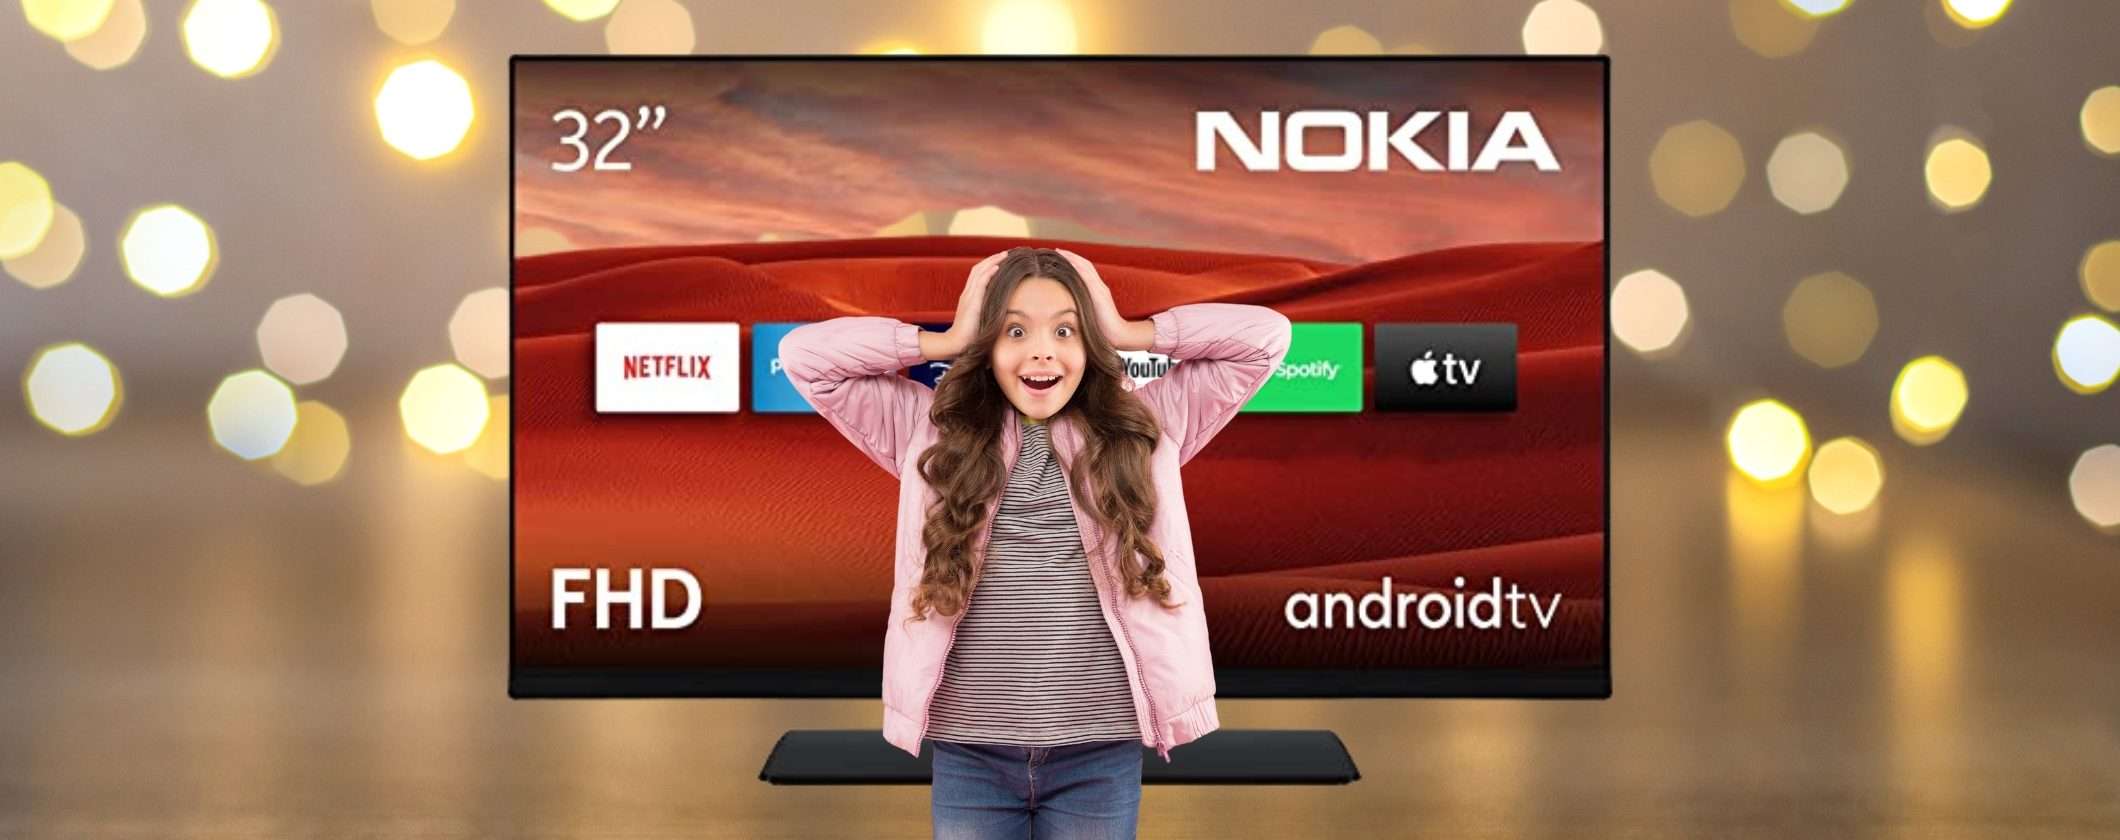 Nokia Smart TV 32